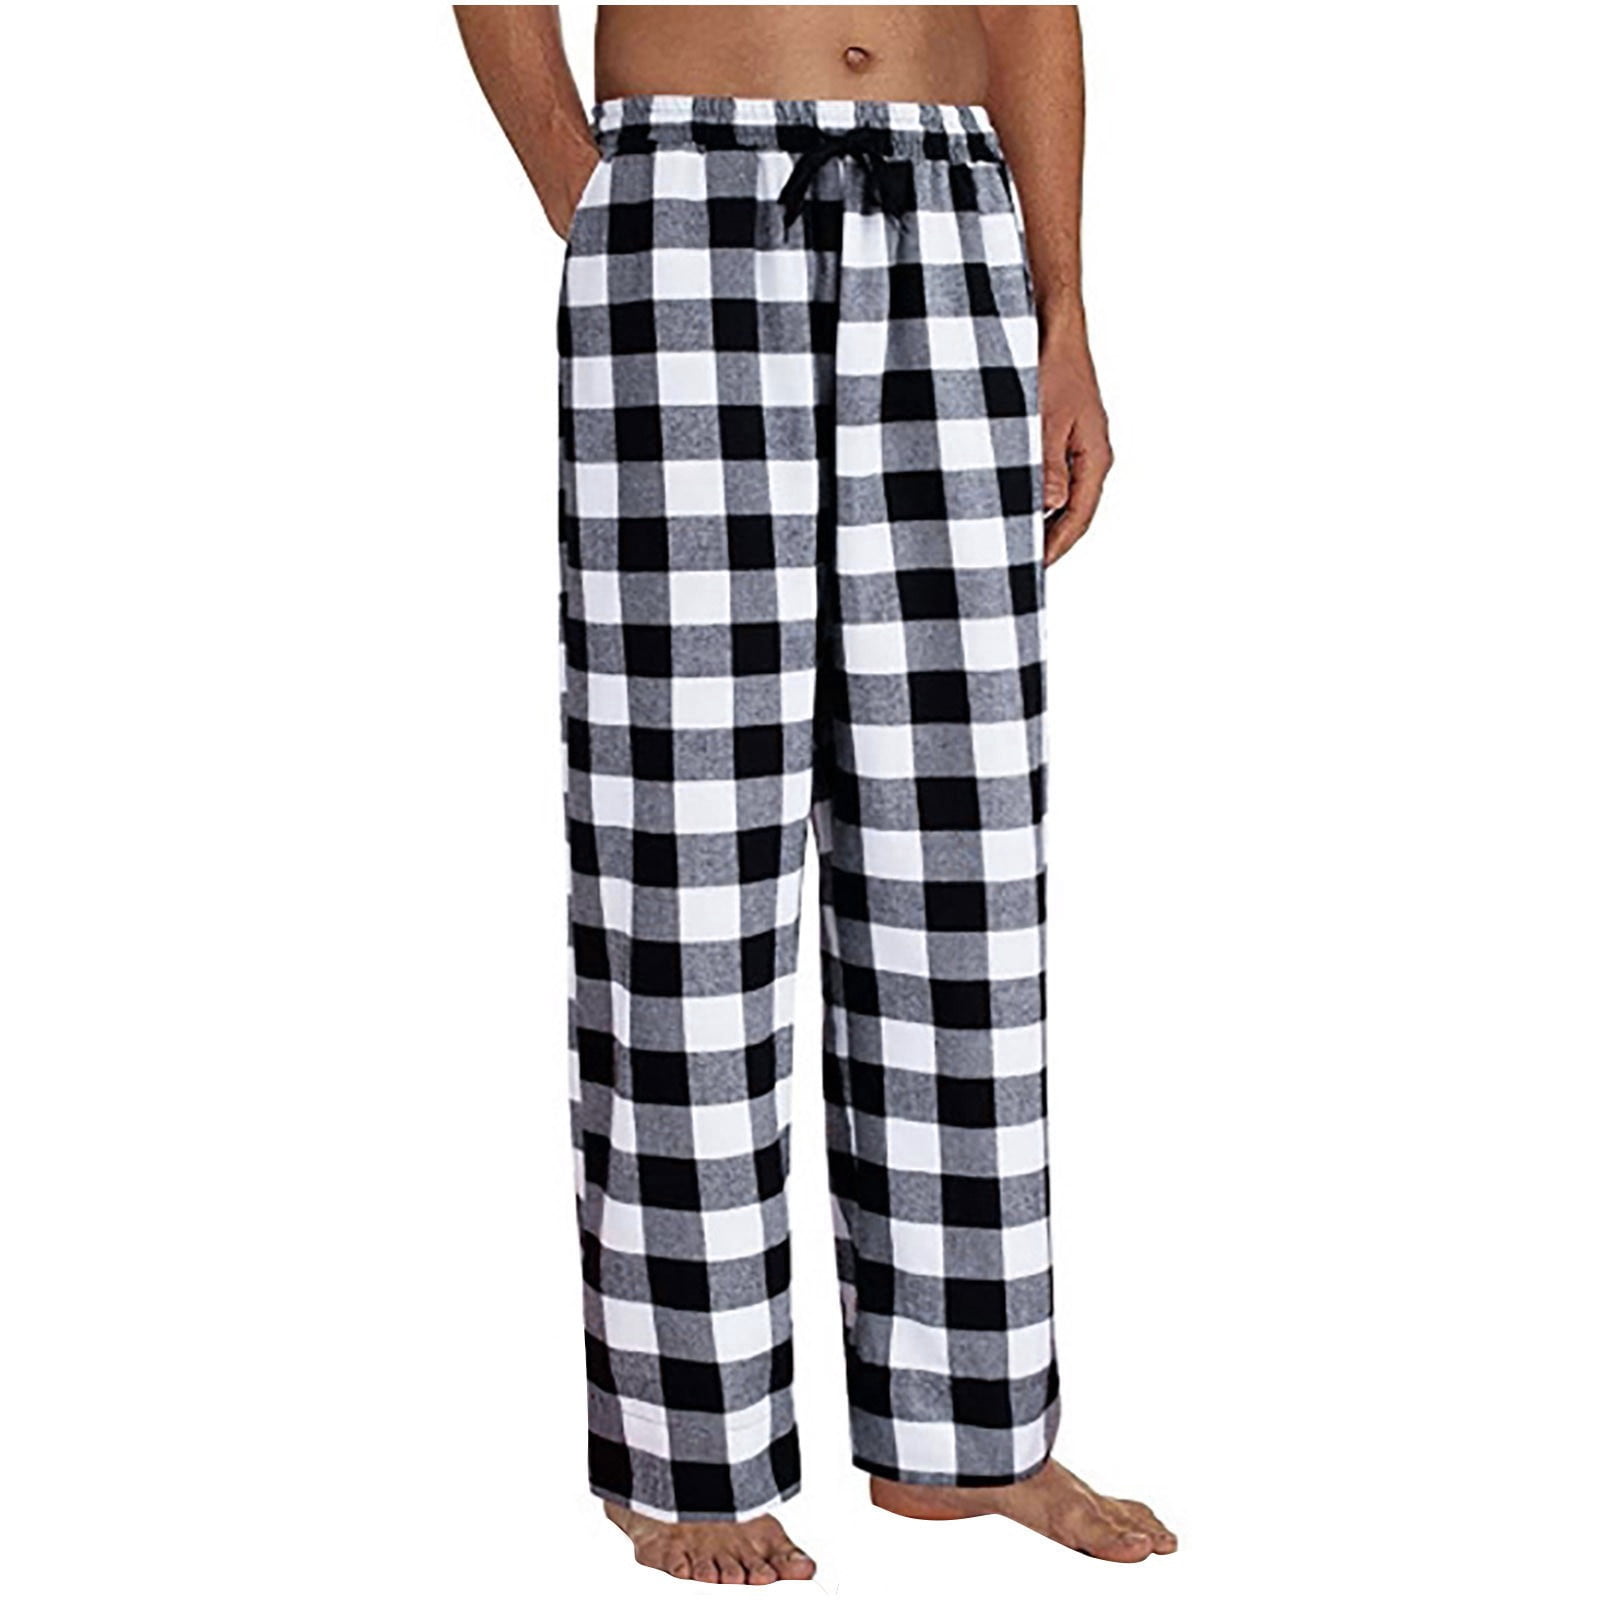 Plaid Pajama Pants Under 5 Dollar Items Packers Gifts for Men Mens Zip up  Hoodies Black Dress Clearance Items Under 10 Dollars Funny Tshirts Shirts  for Men Men